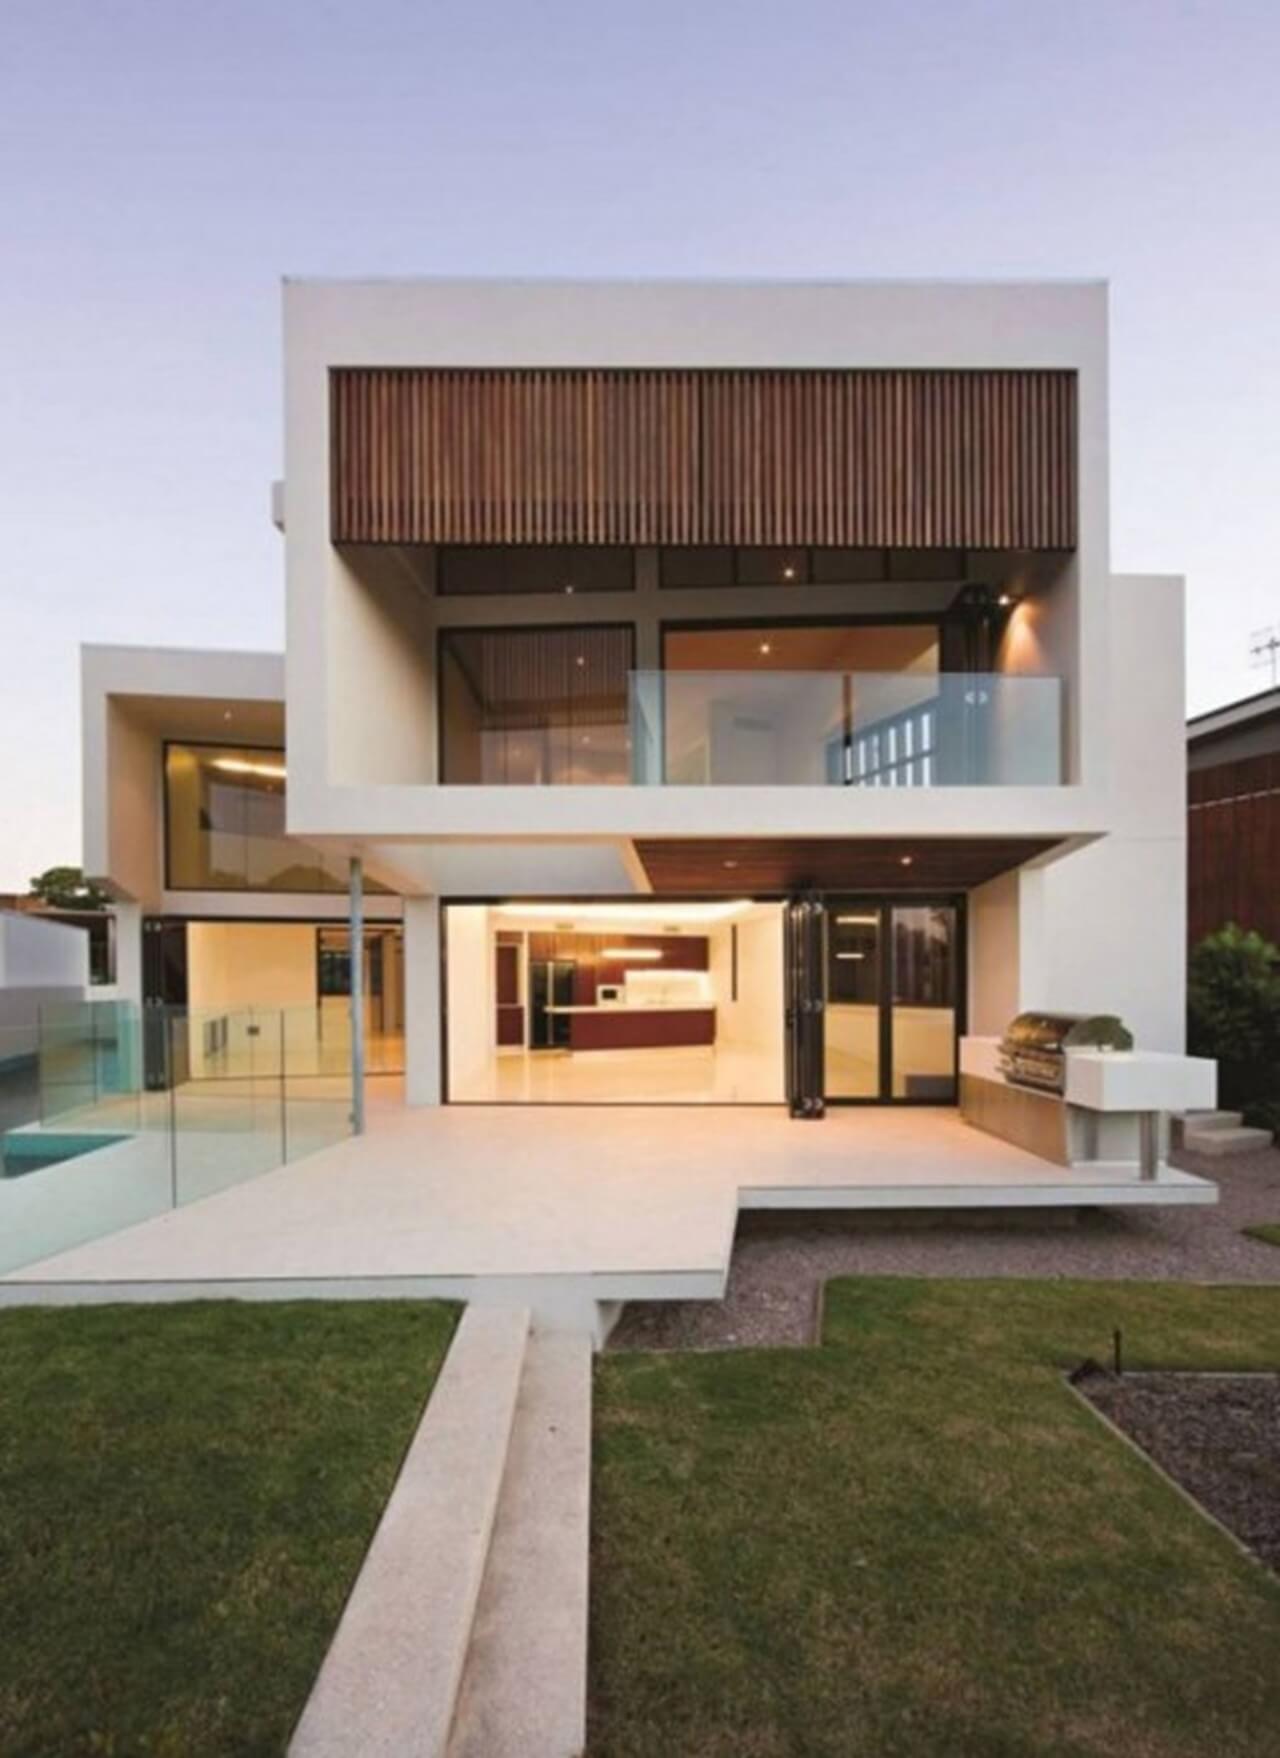 modern house design ideas